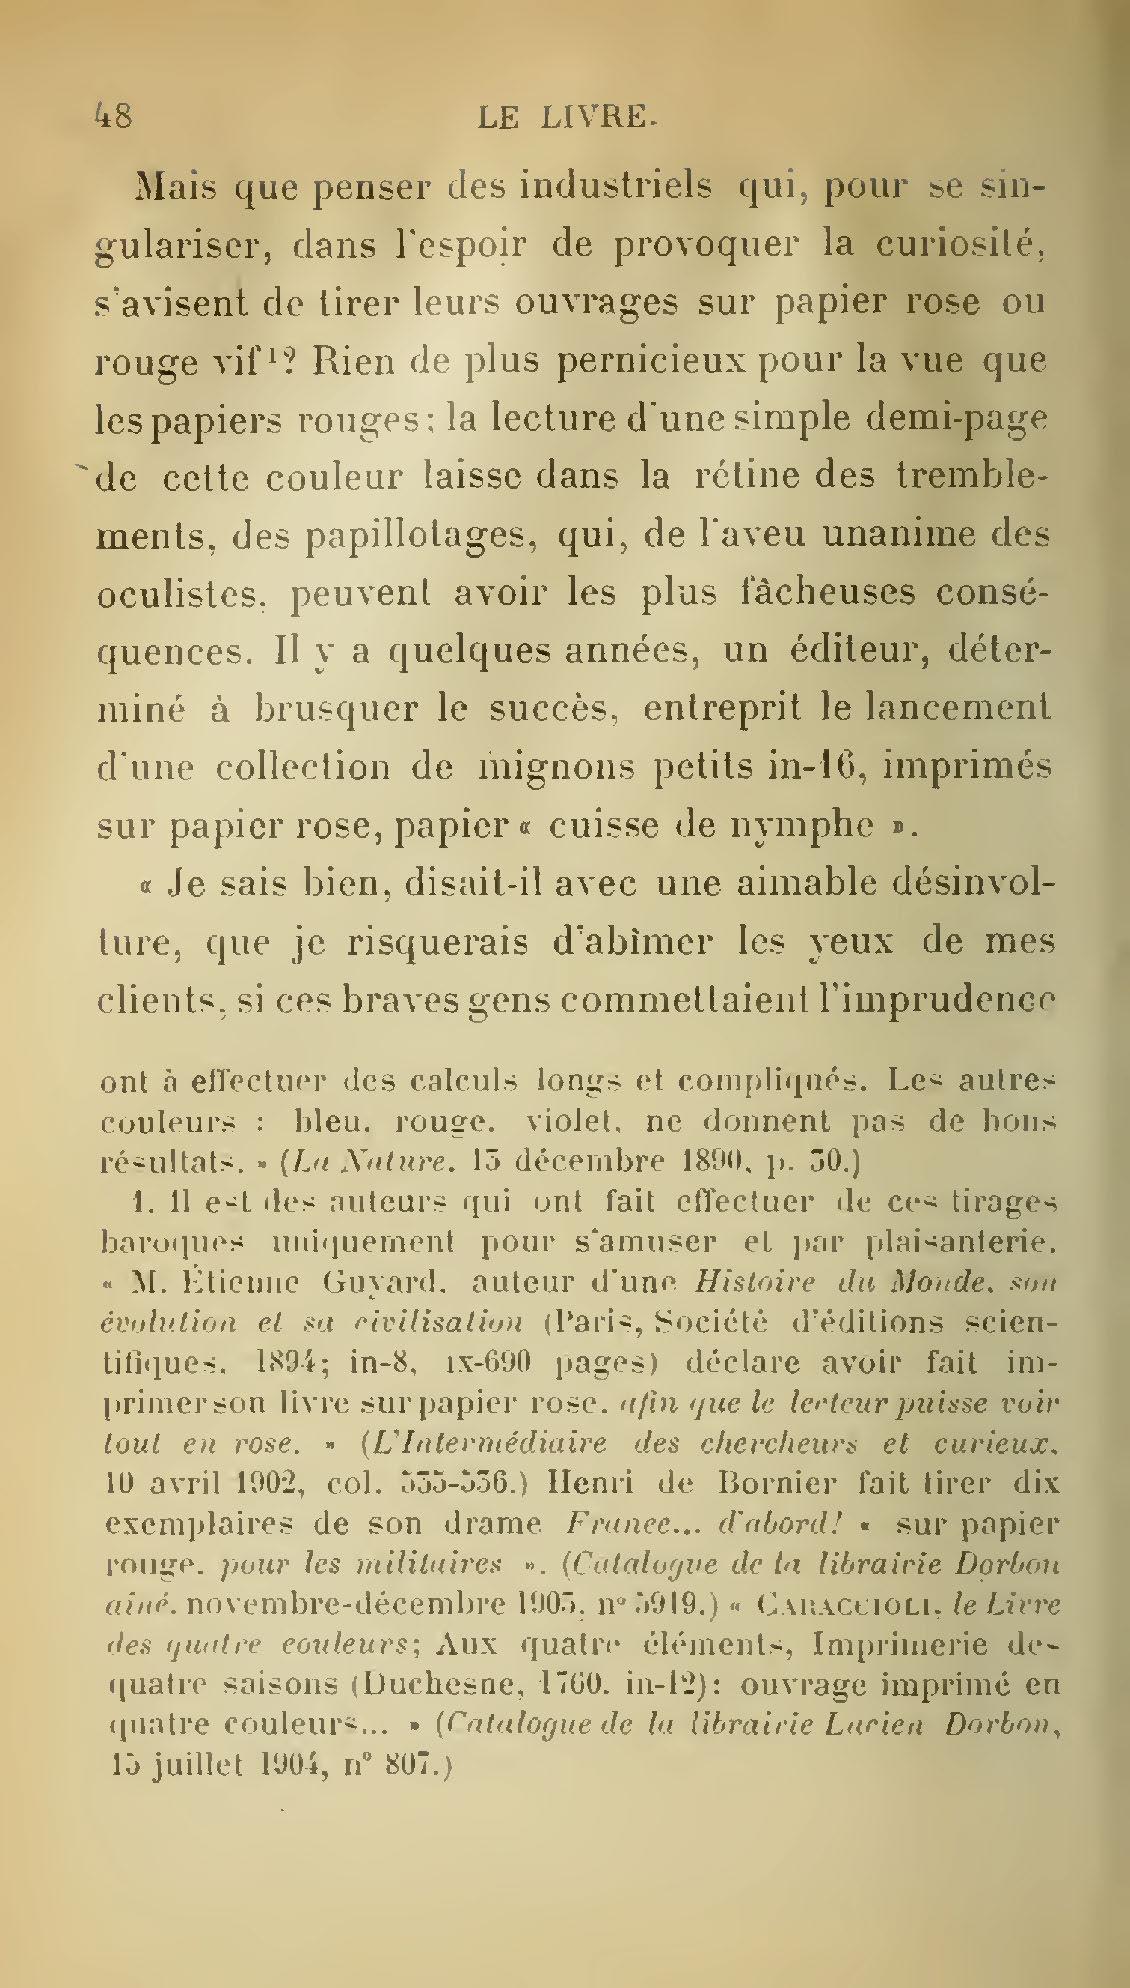 Albert Cim, Le Livre, t. III, p. 48.